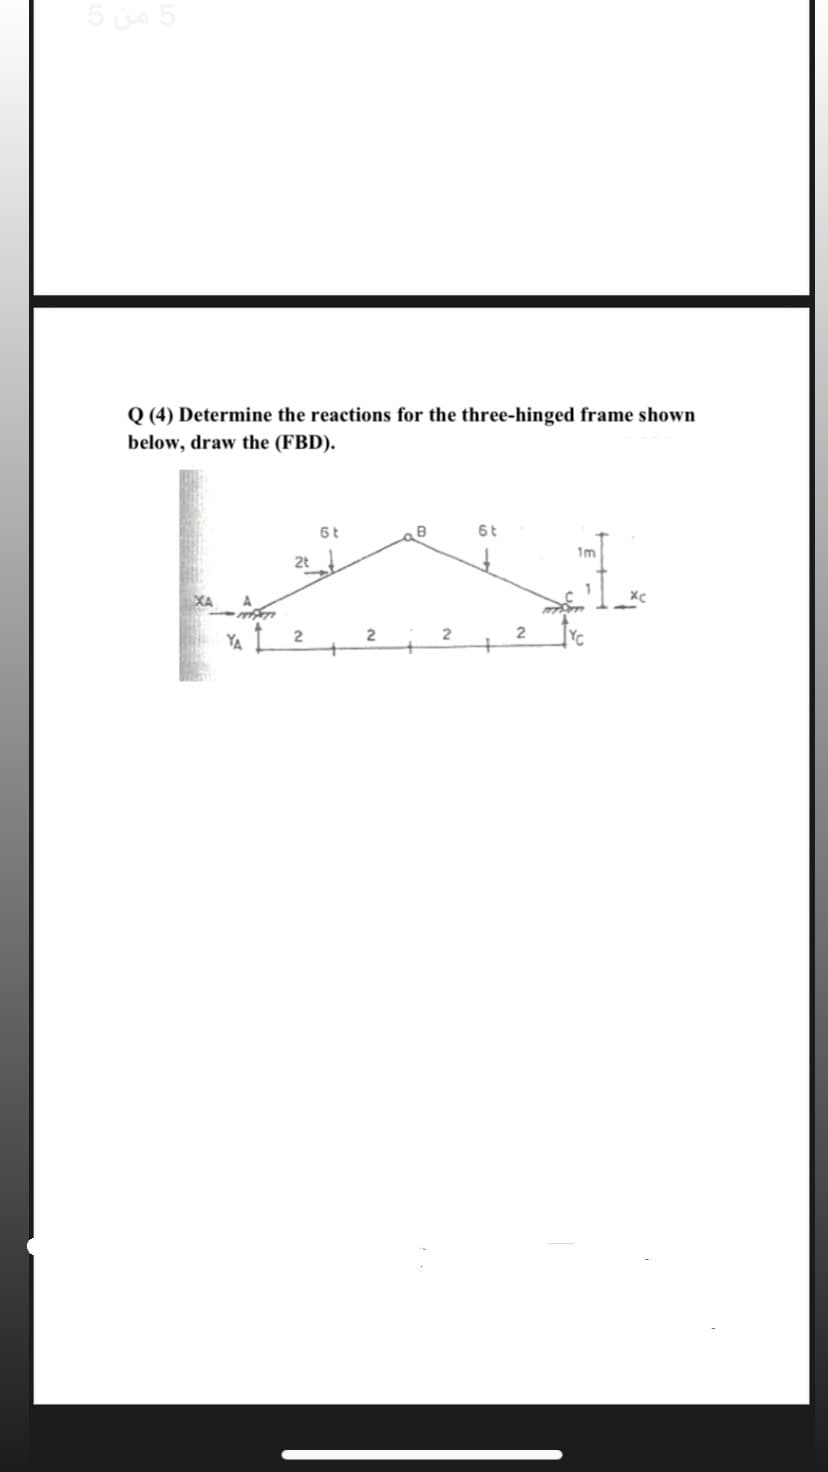 5 5
Q (4) Determine the reactions for the three-hinged frame shown
below, draw the (FBD).
6t
B
6t
1m
XA
2
YA
